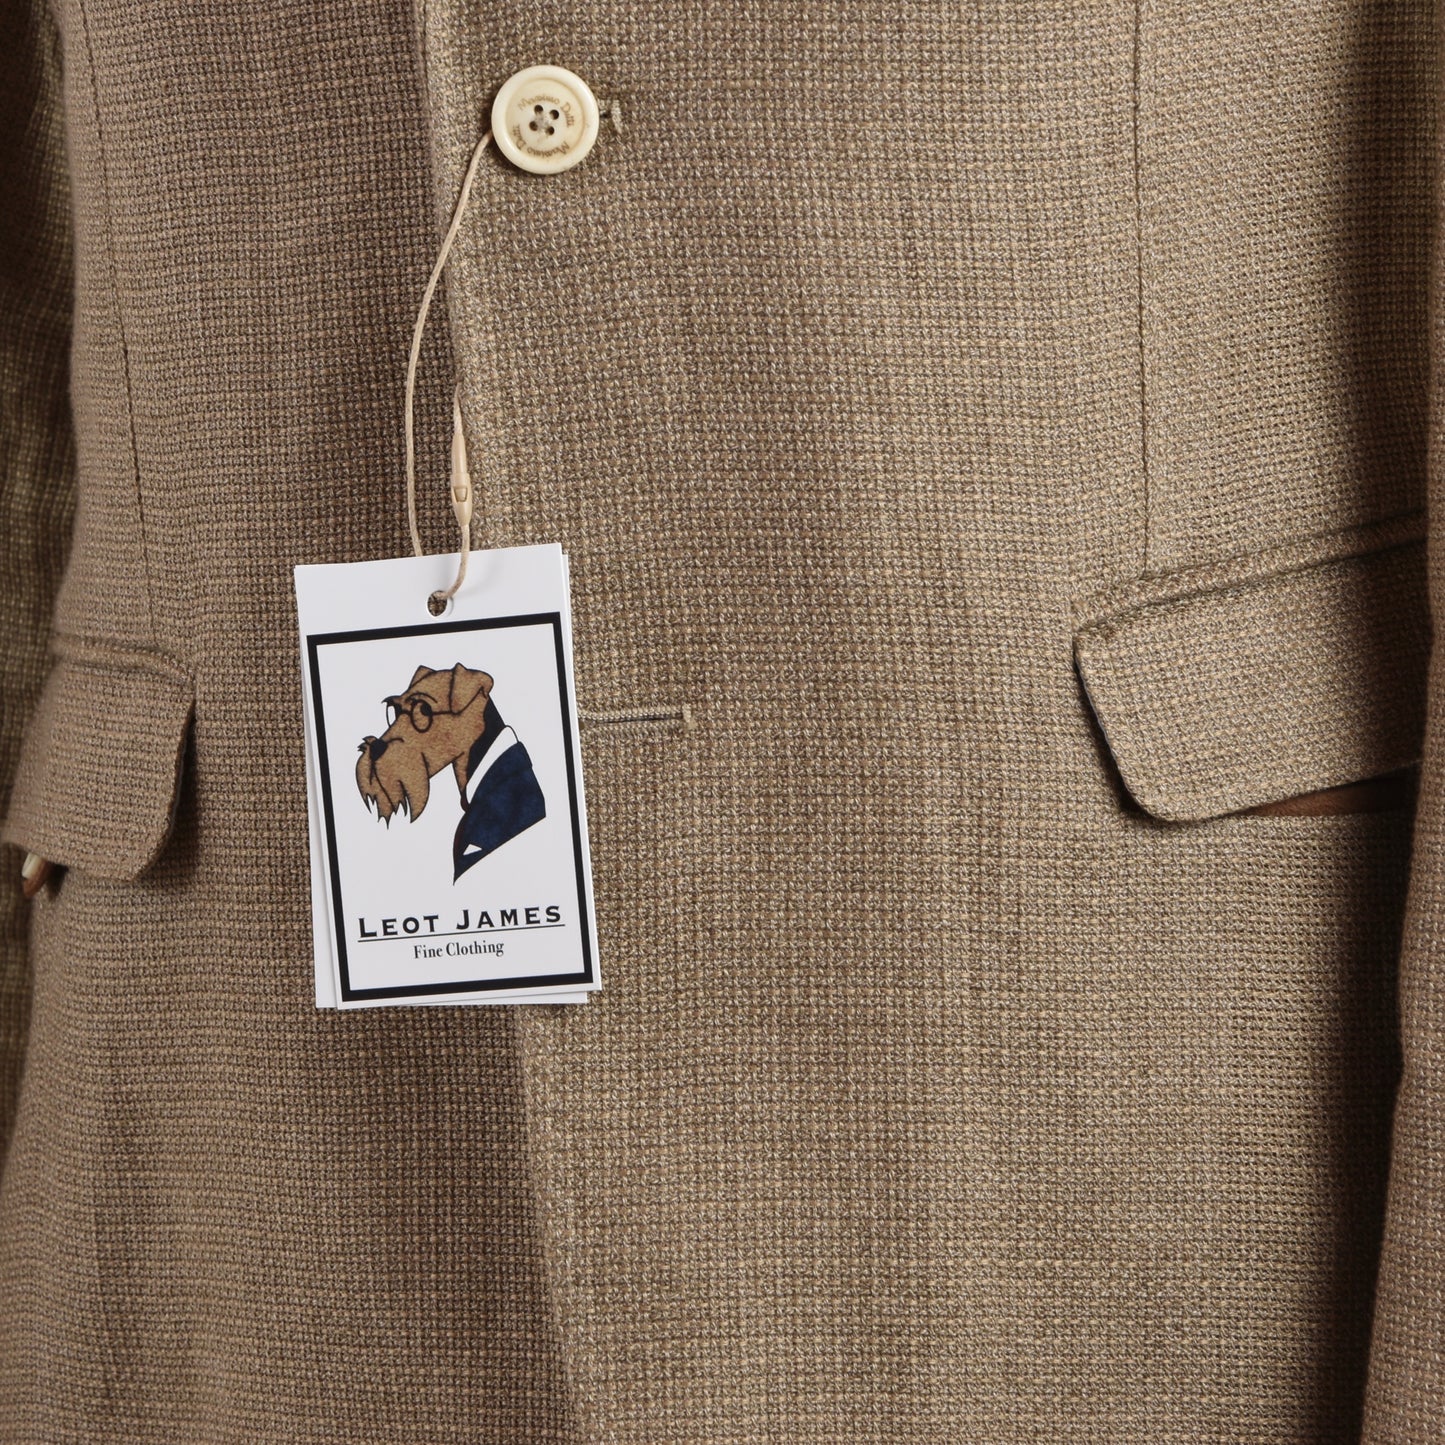 Massimo Dutti Cotton/Linen Jacket Size 52 - Tan/Beige